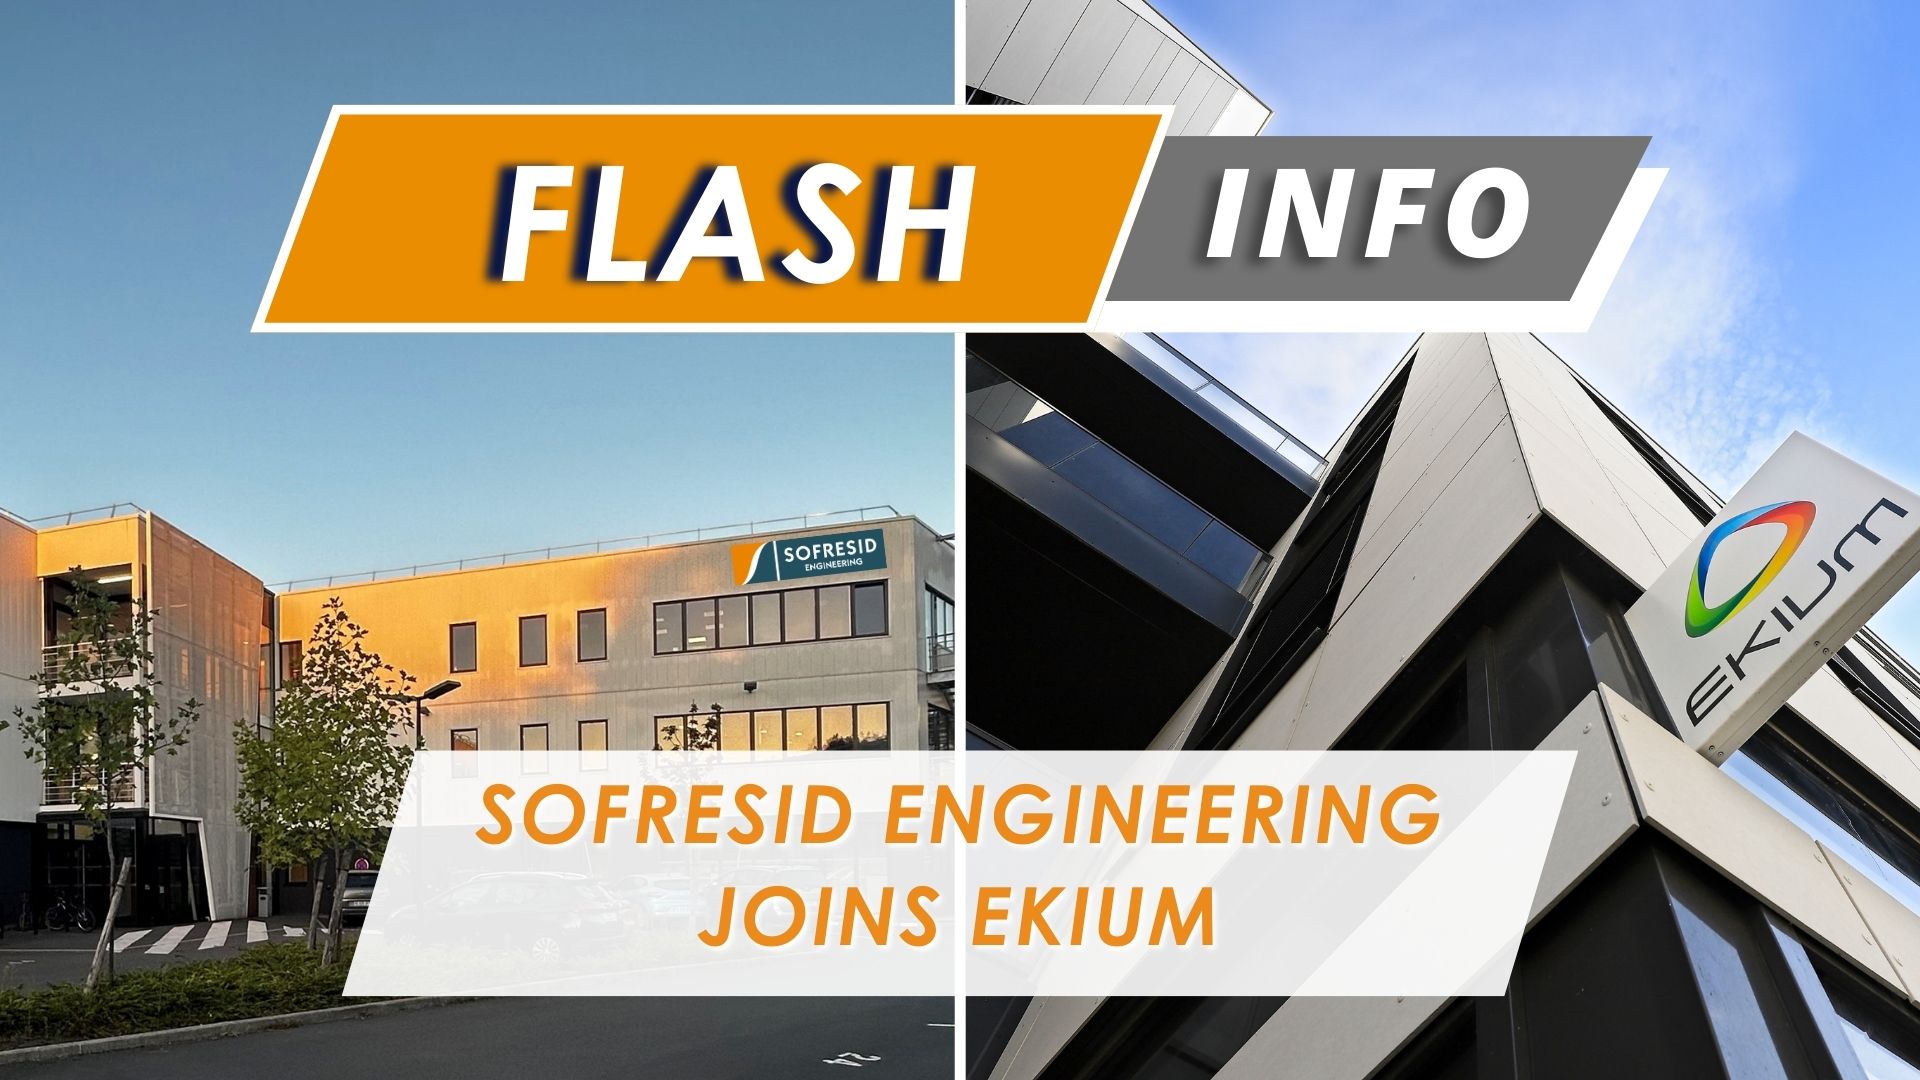 Sofresid Engineering joins Ekium